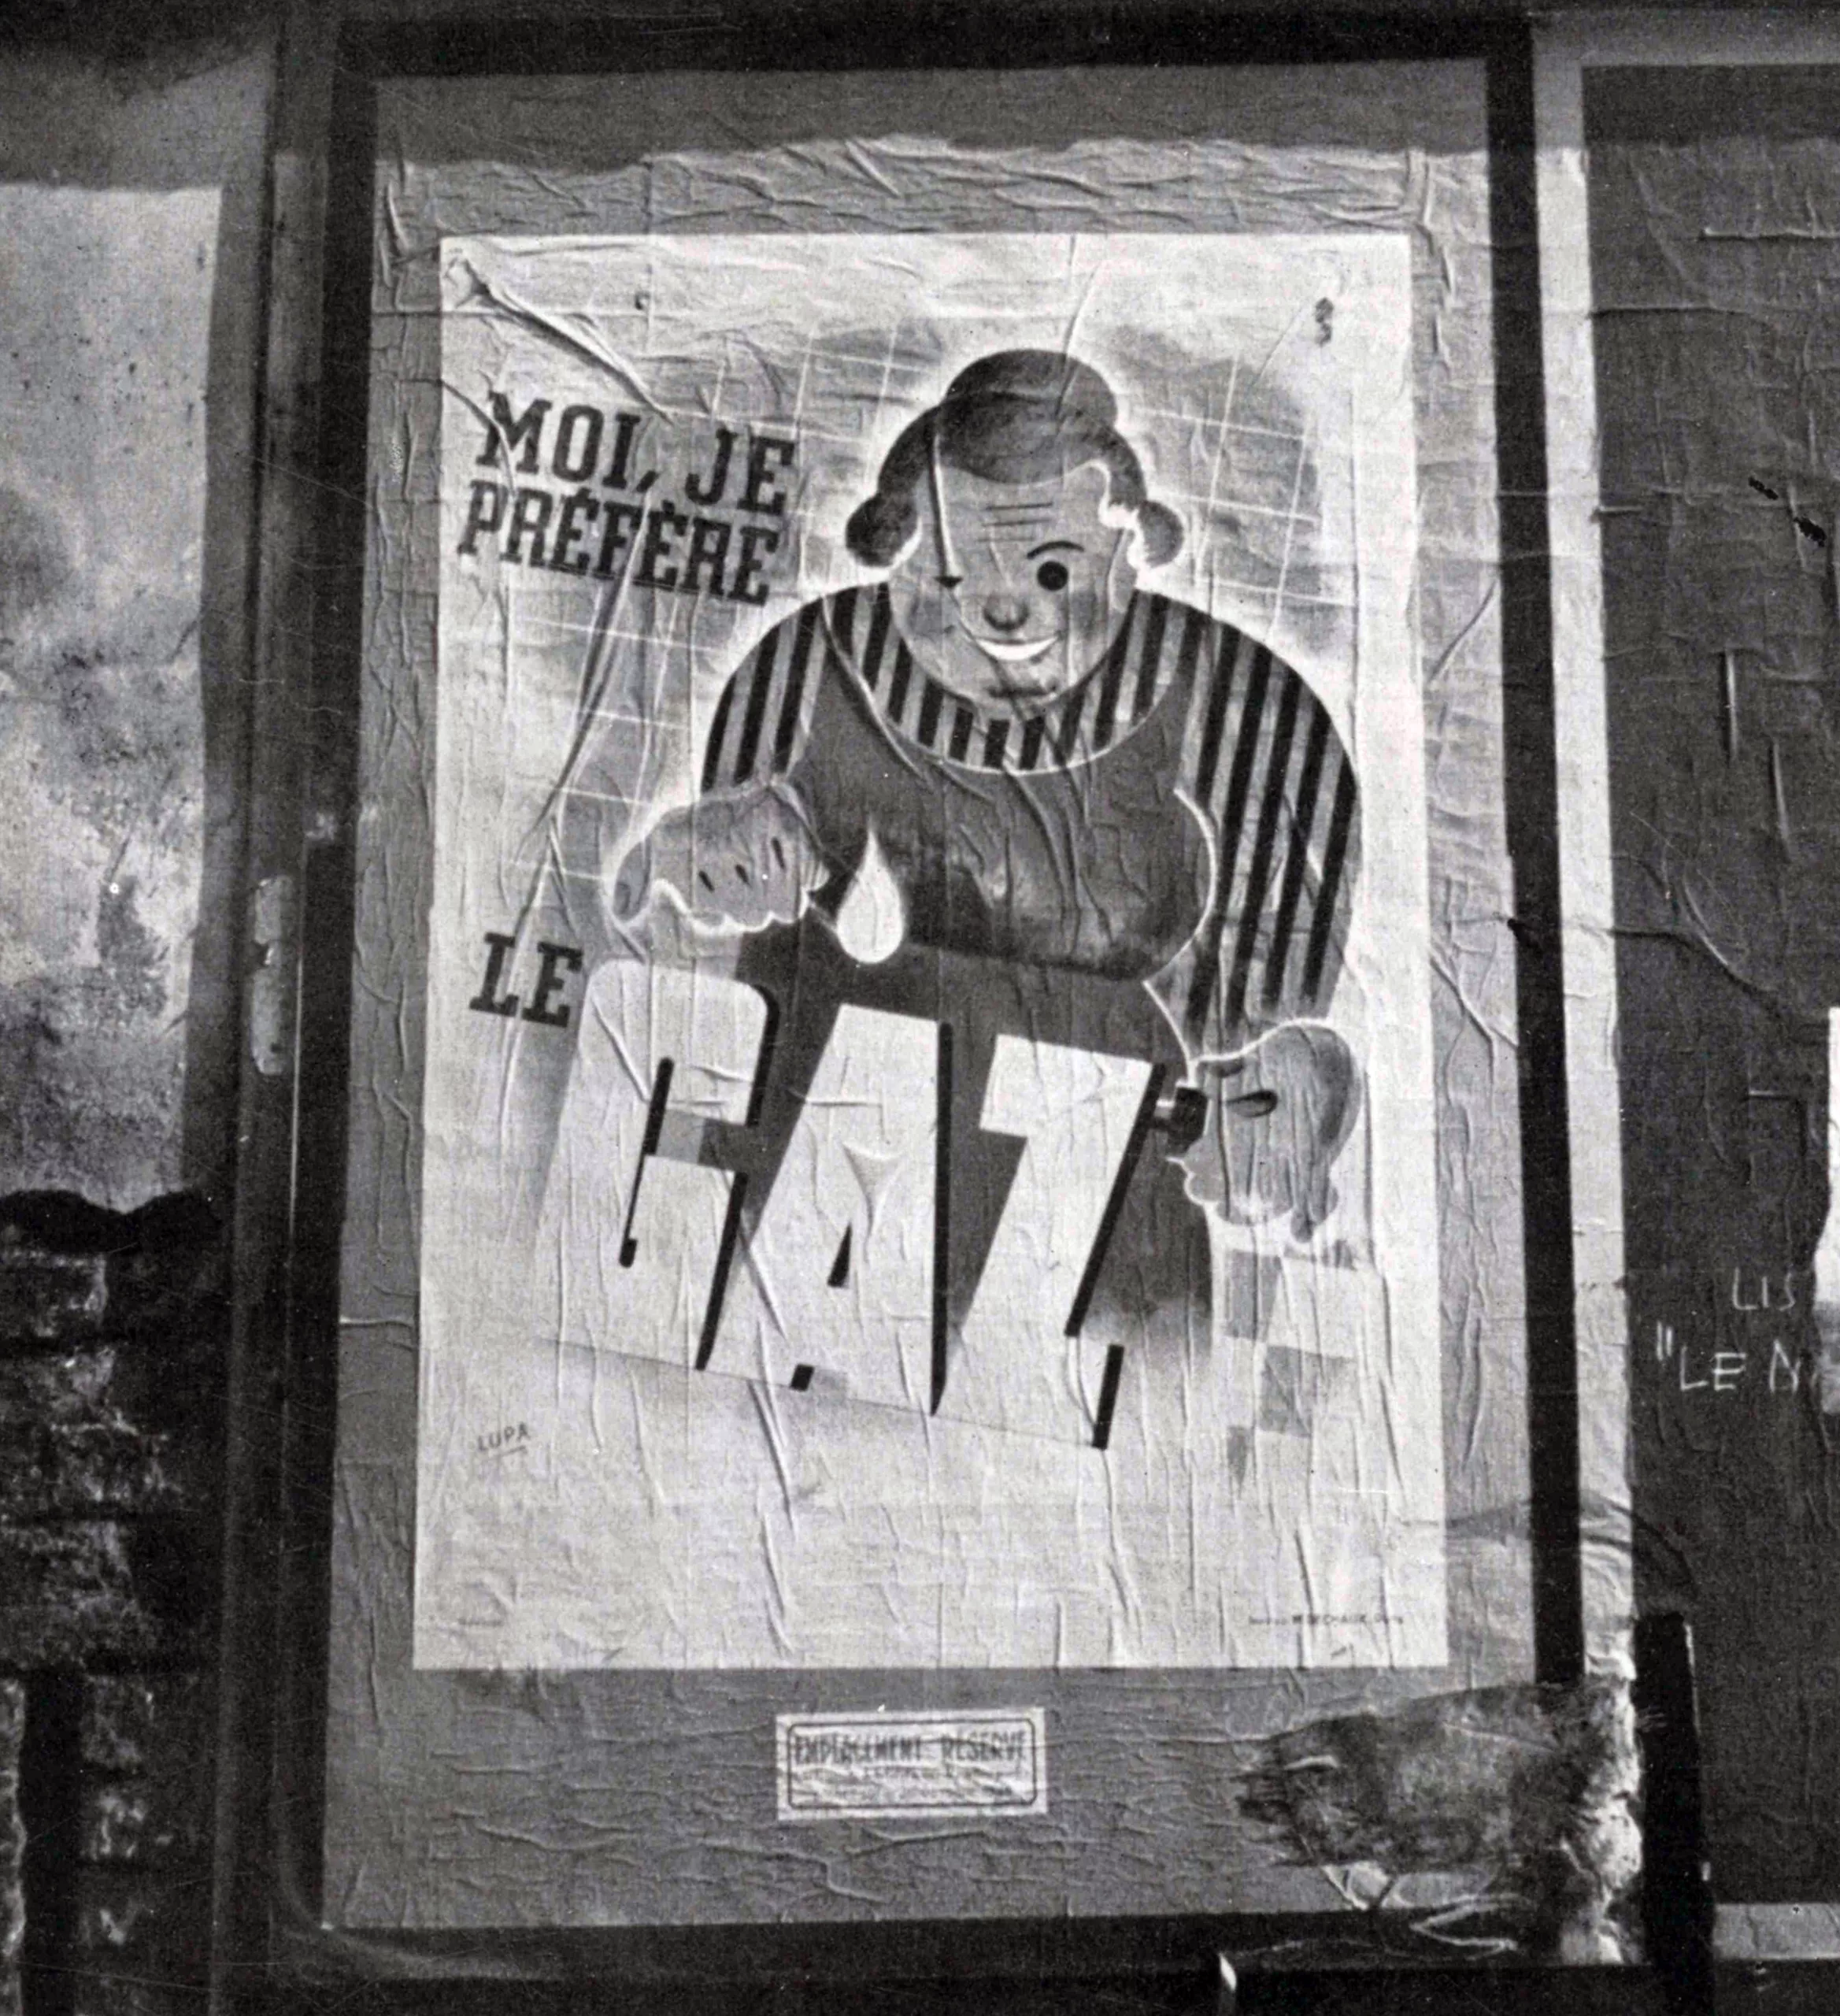 Analysis of Paris Poster Hoardings - Photograph by Maywald, Paris